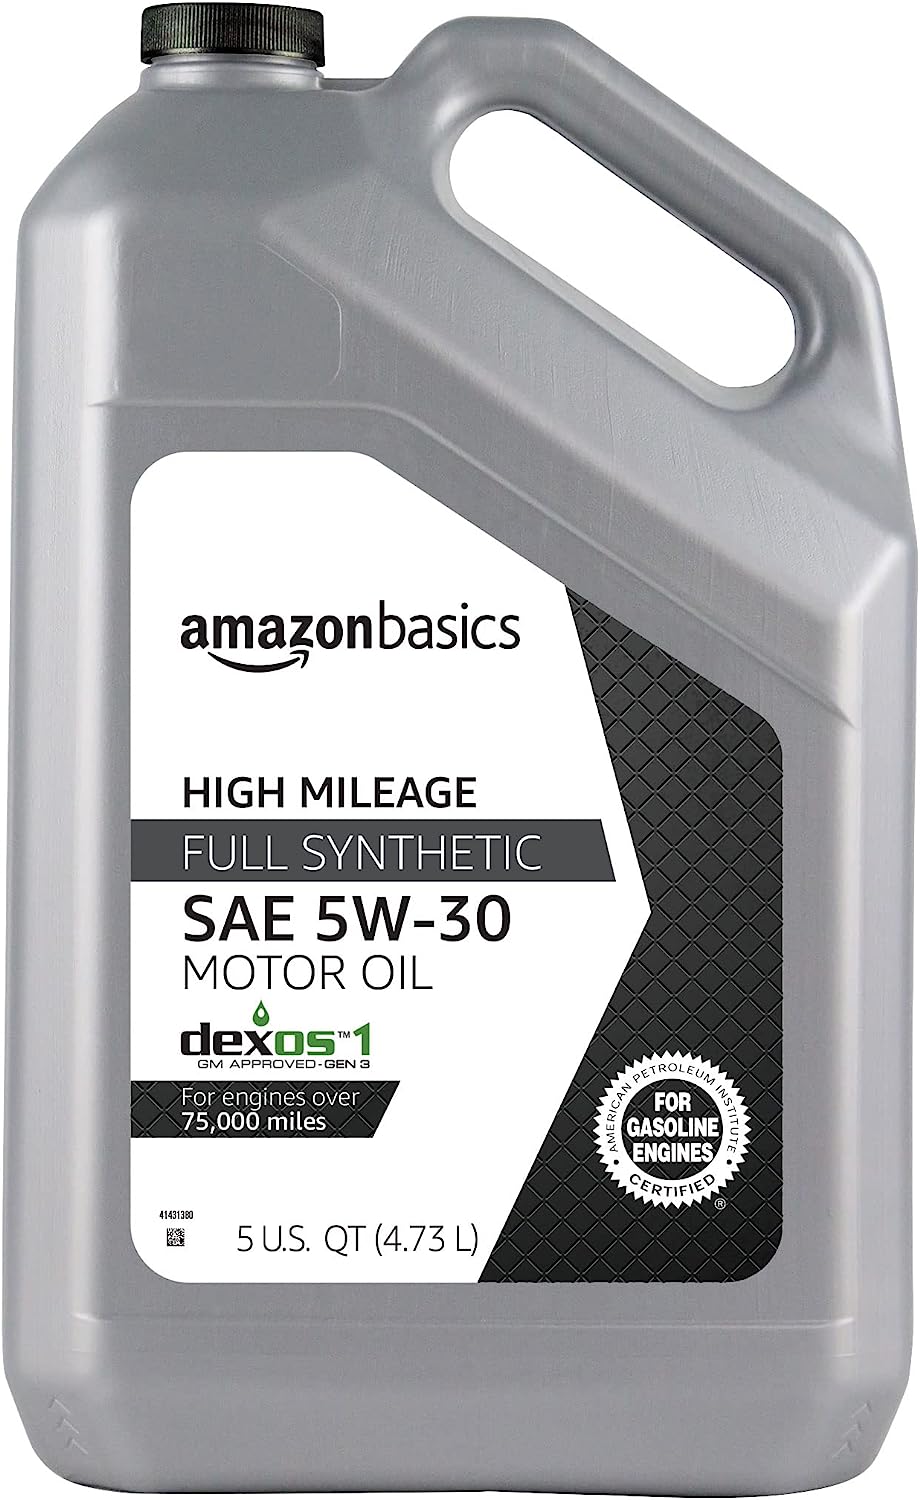 Amazon Basics High Mileage Motor Oil - Full Synthetic [...]